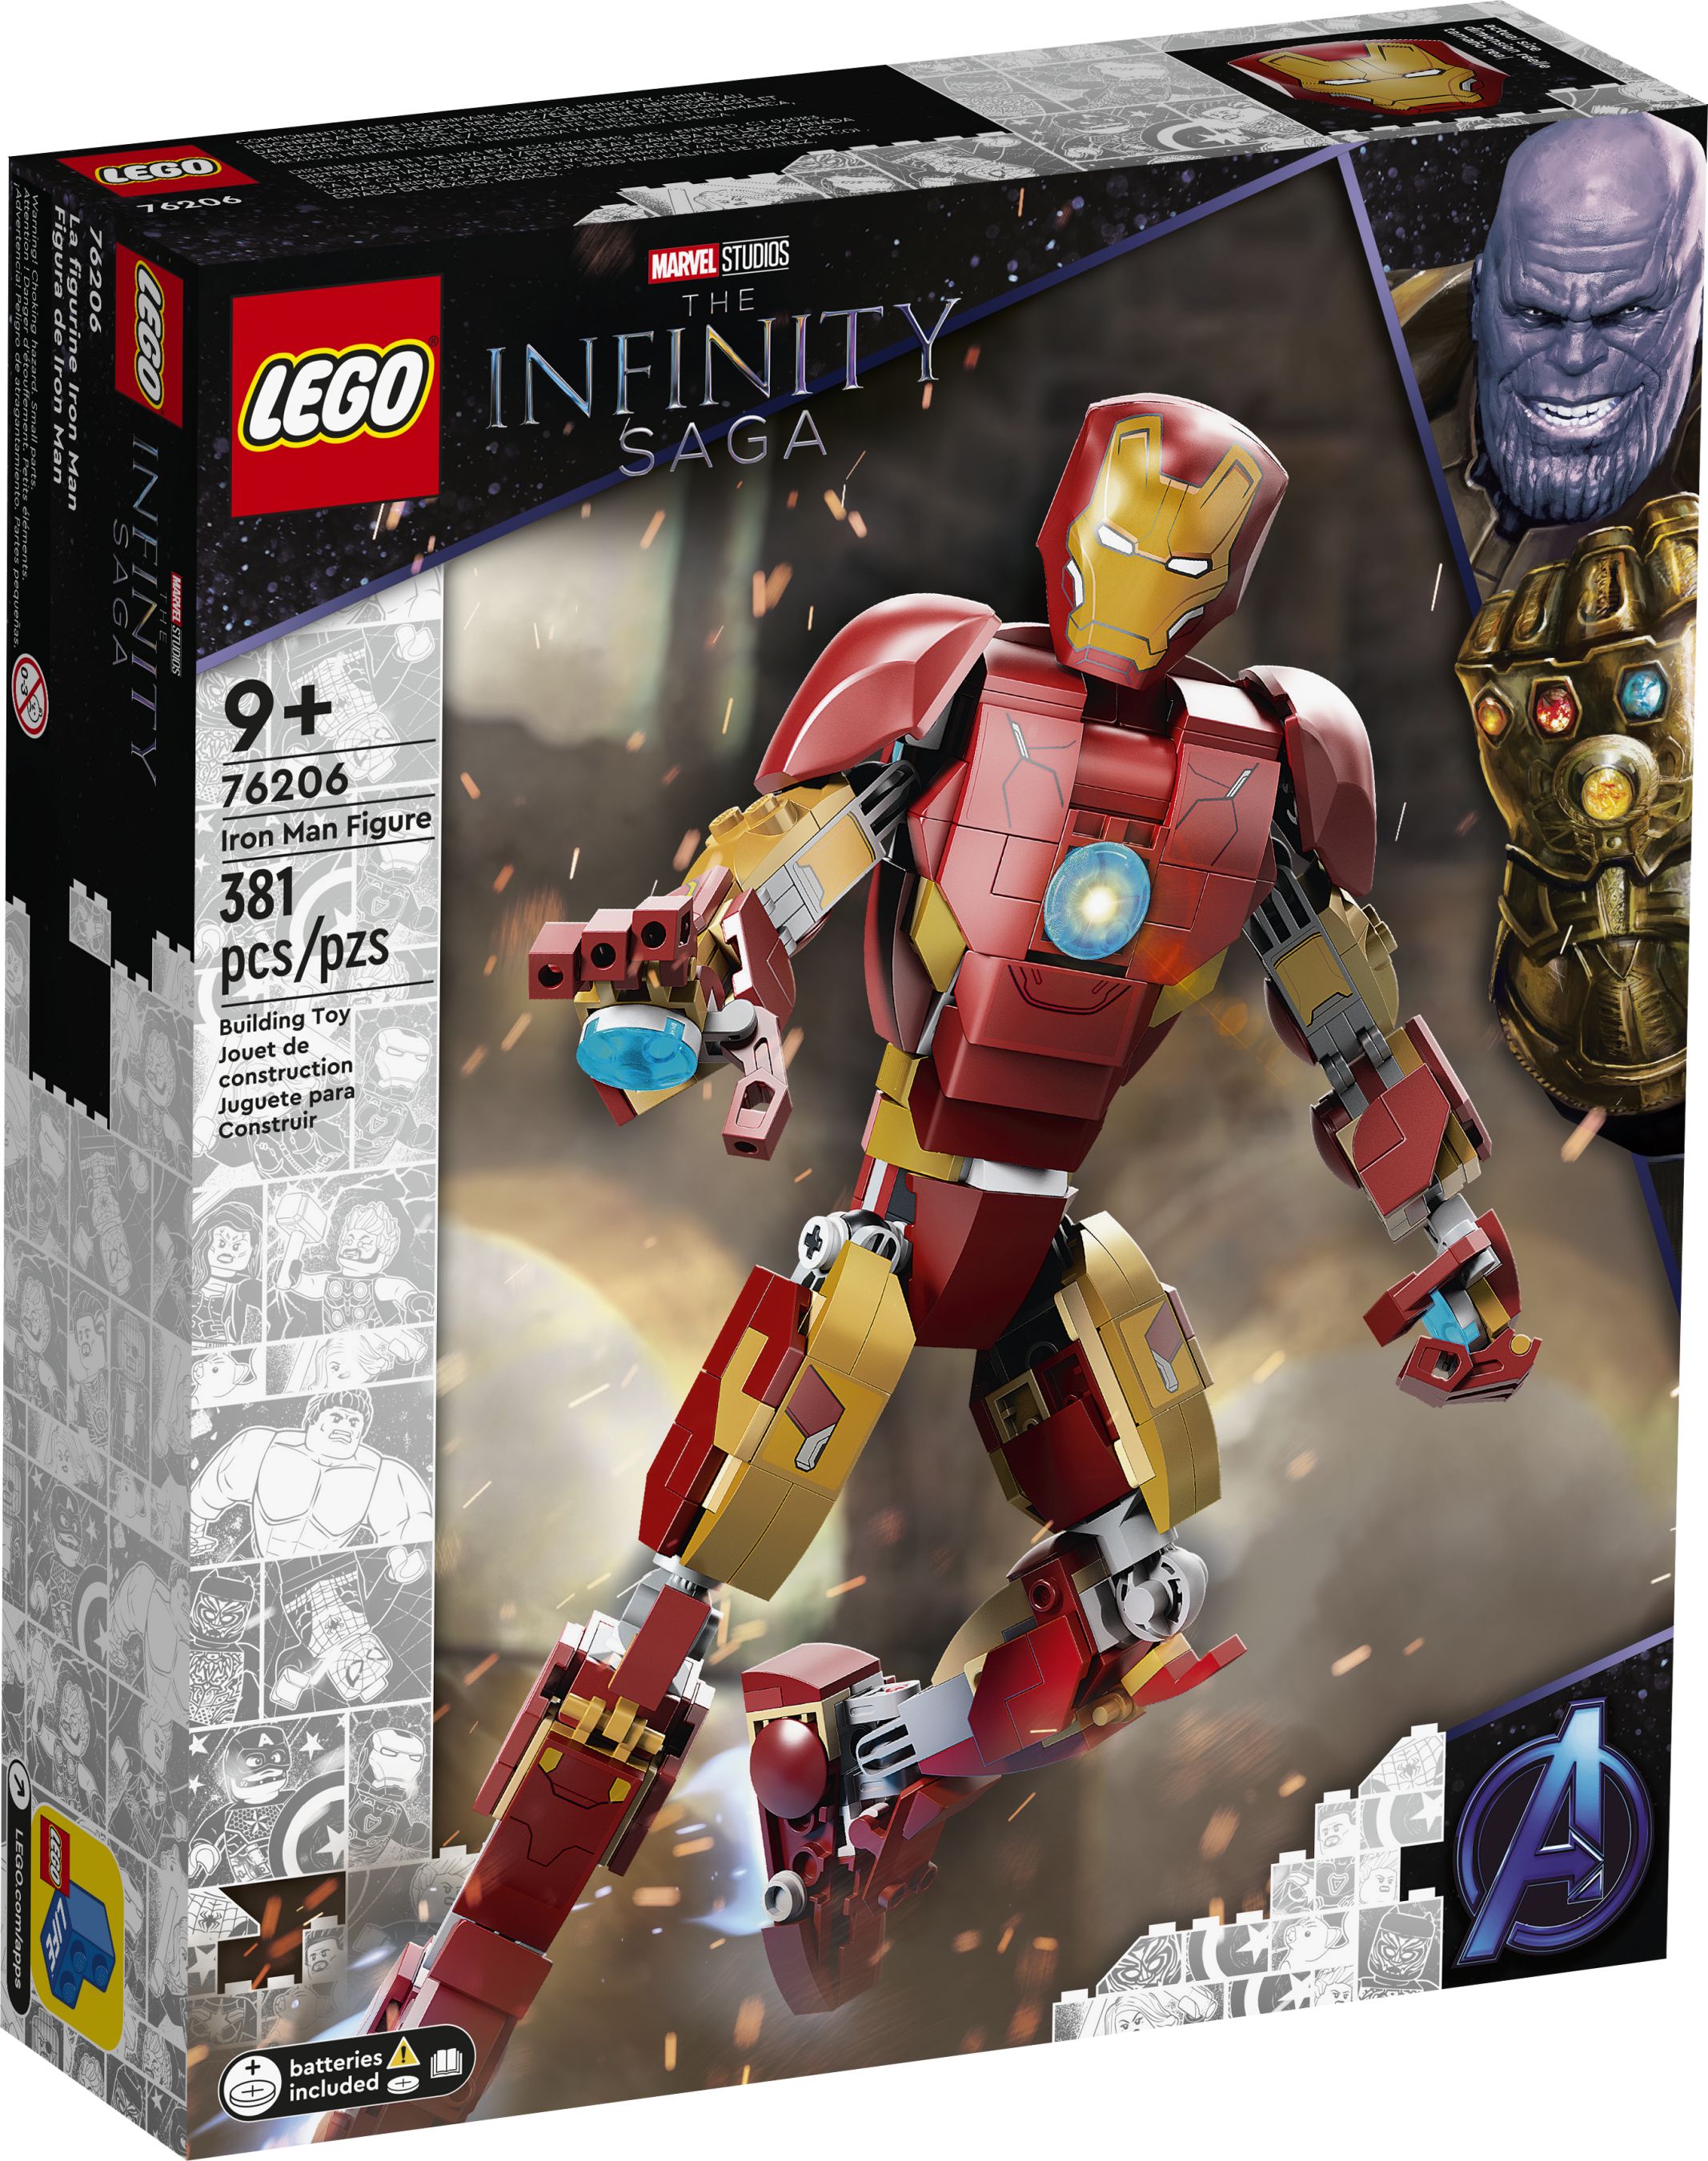 LEGO Super Heroes 76206 Iron Man Figur LEGO_76206_box1_v39.jpg